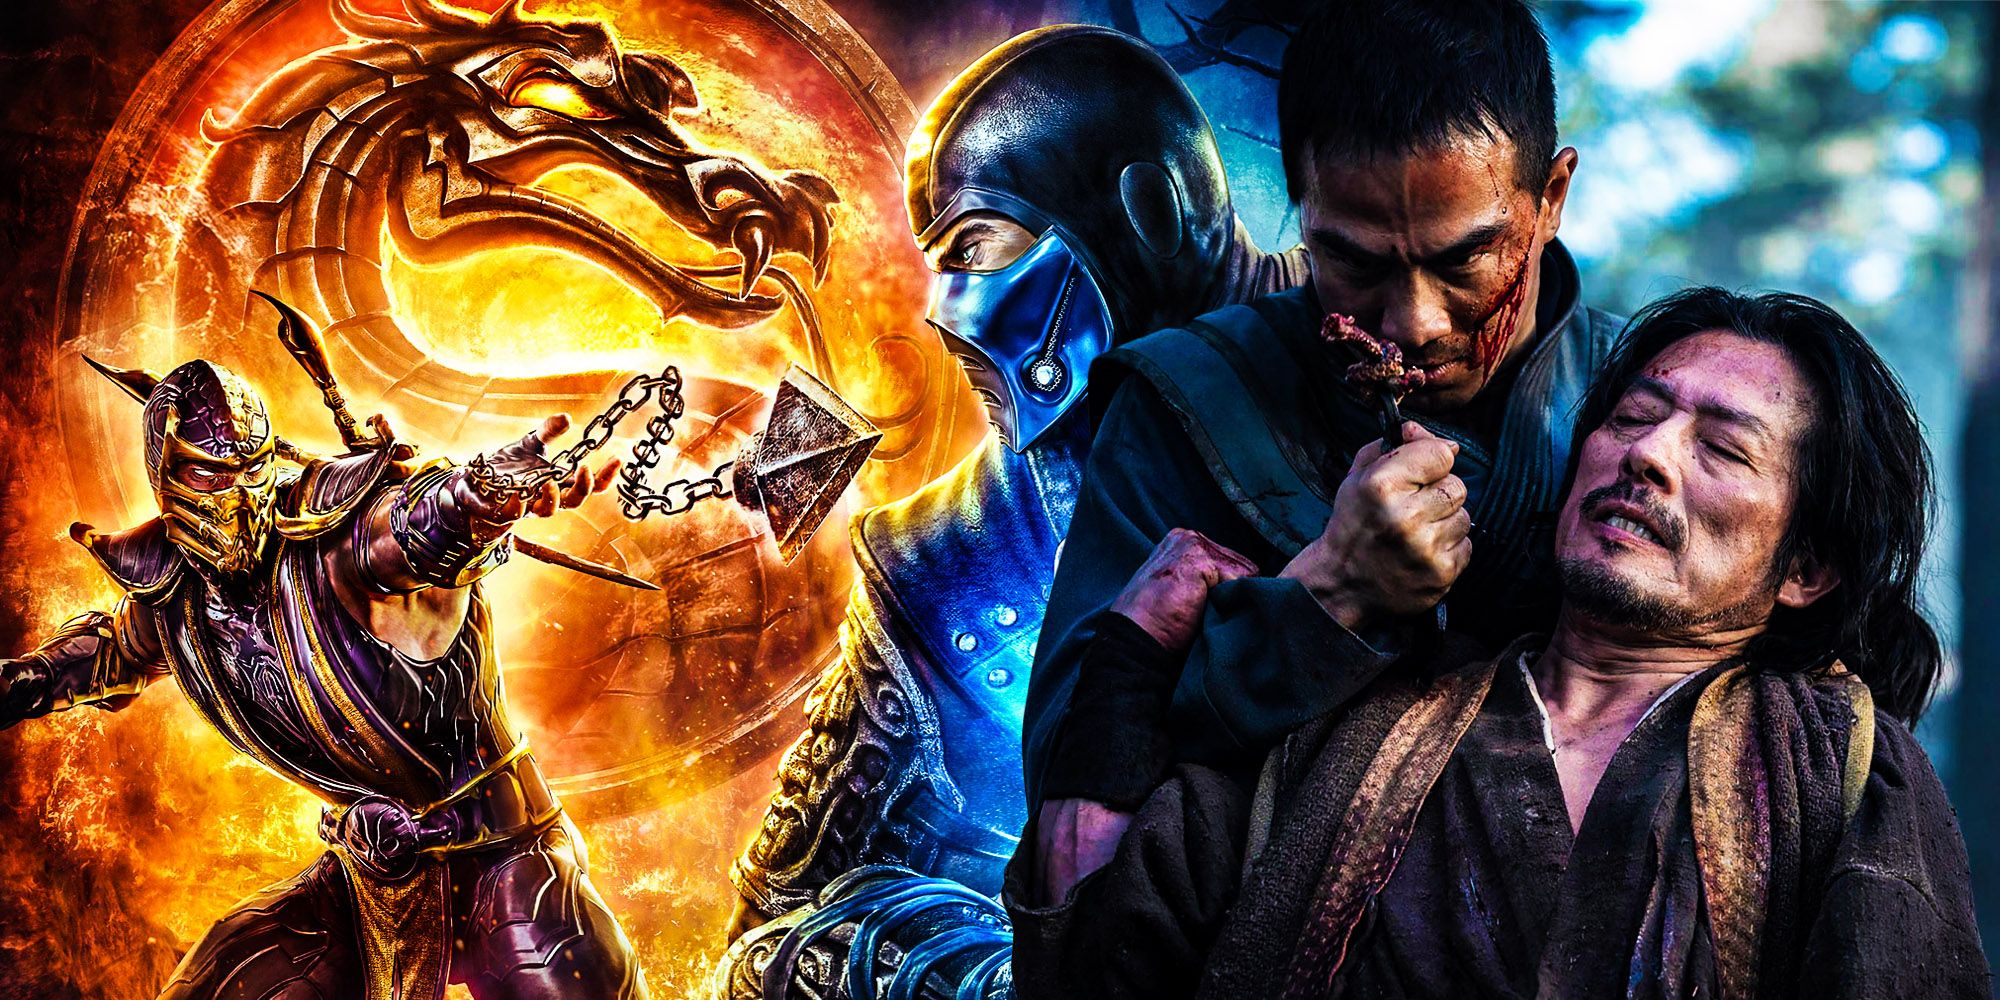 Mortal Kombat Reboot Continues The Original Movie's Kano Retcon